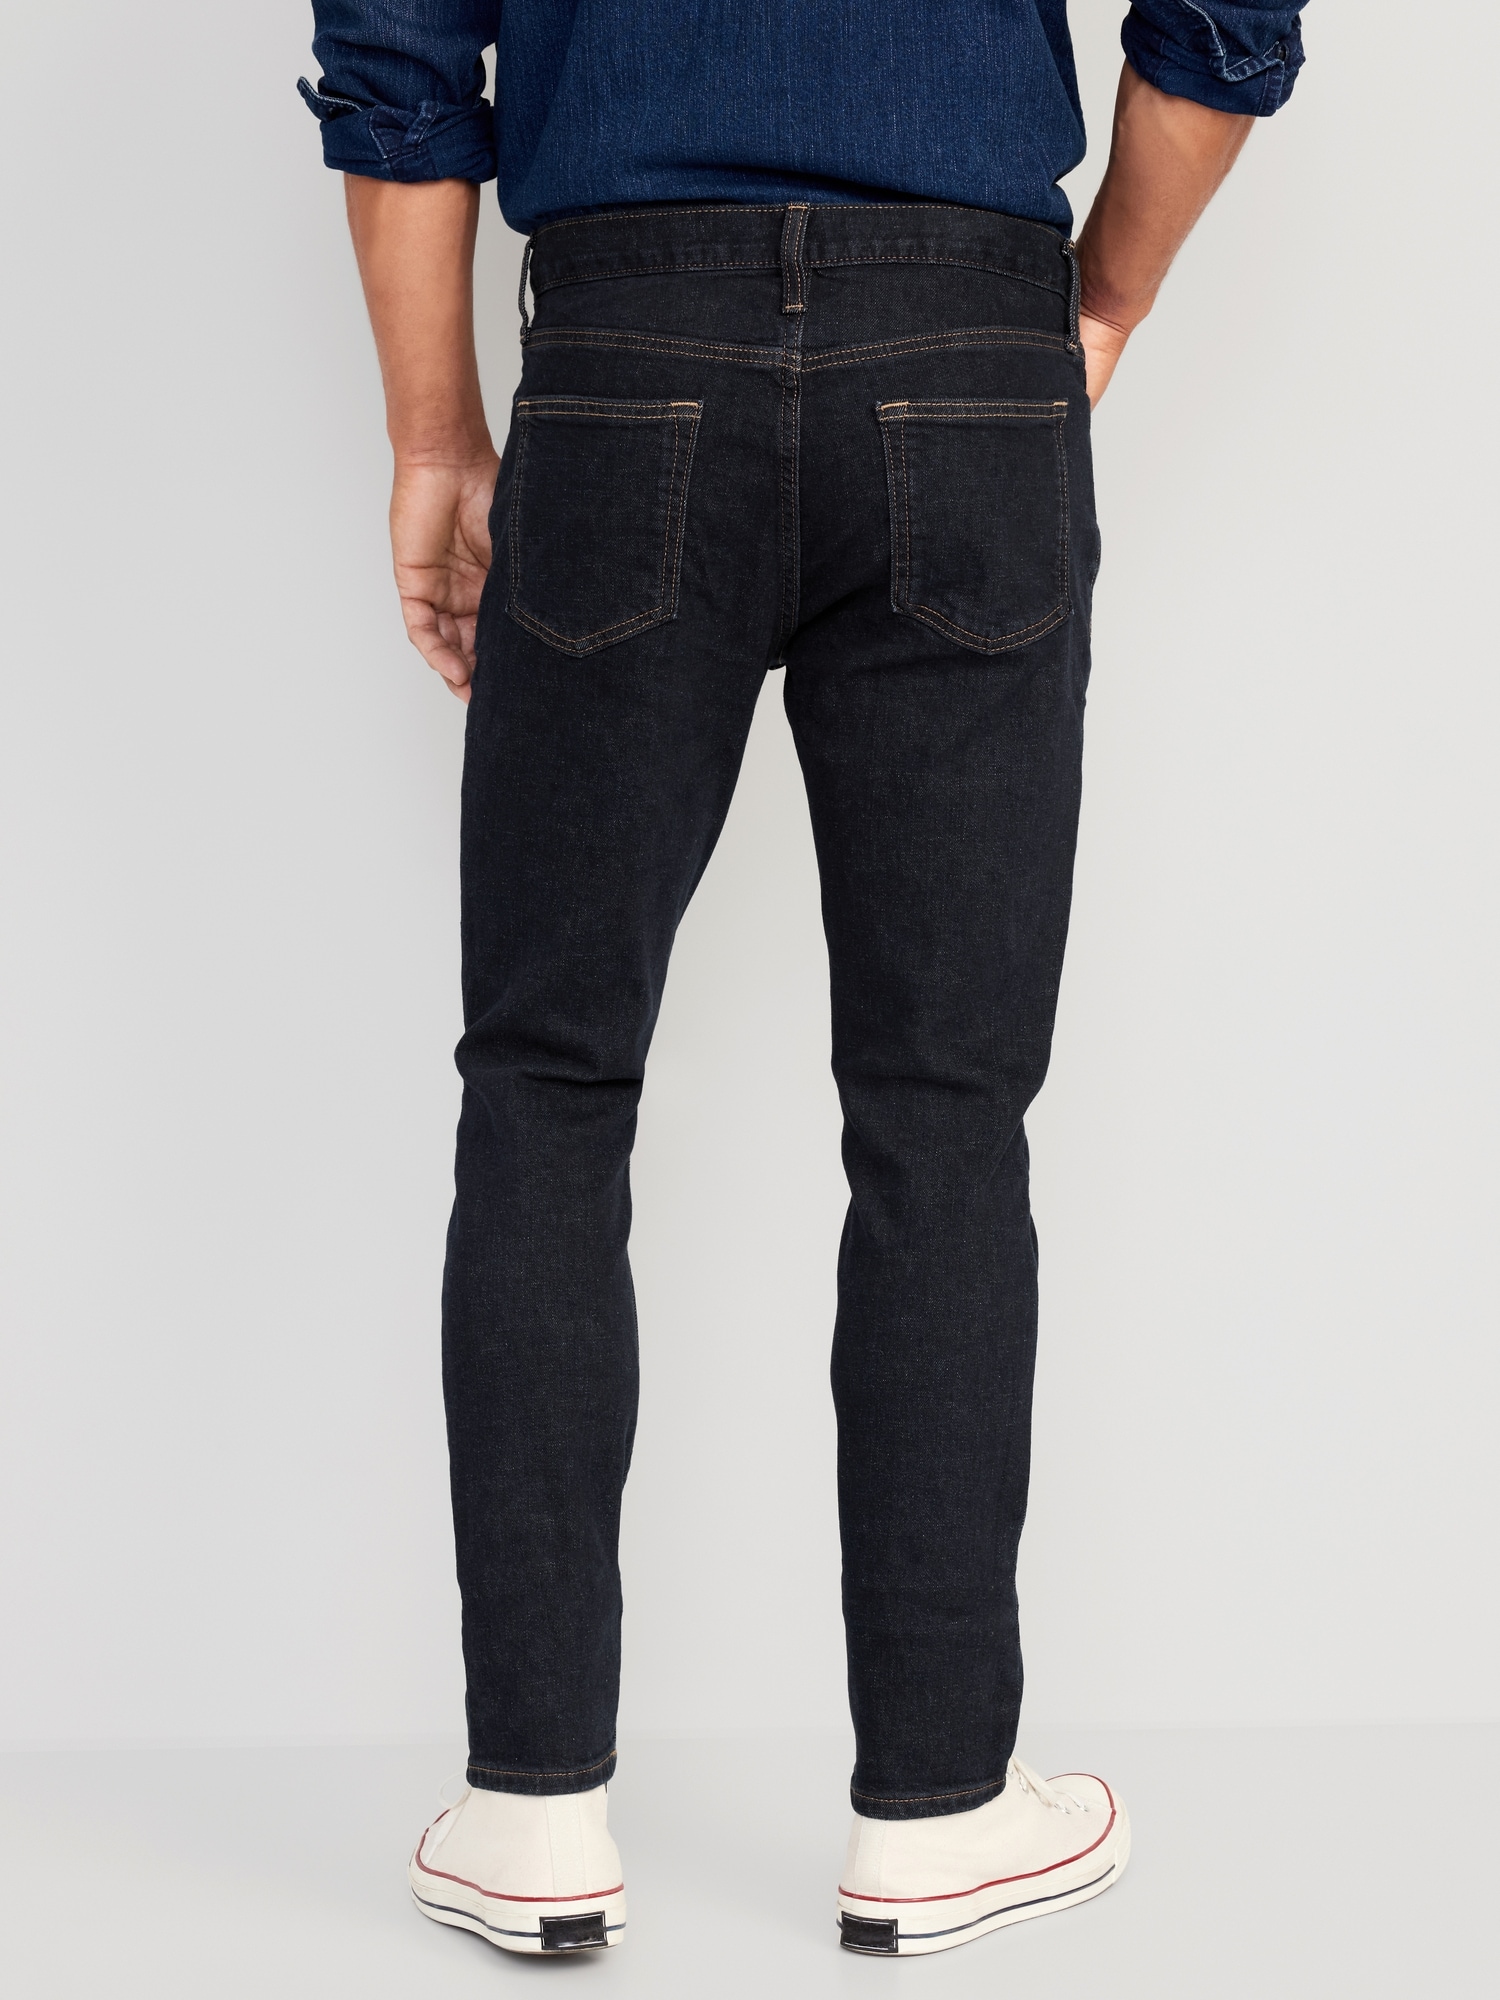 Skinny Flex Jeans For Men | Old Navy